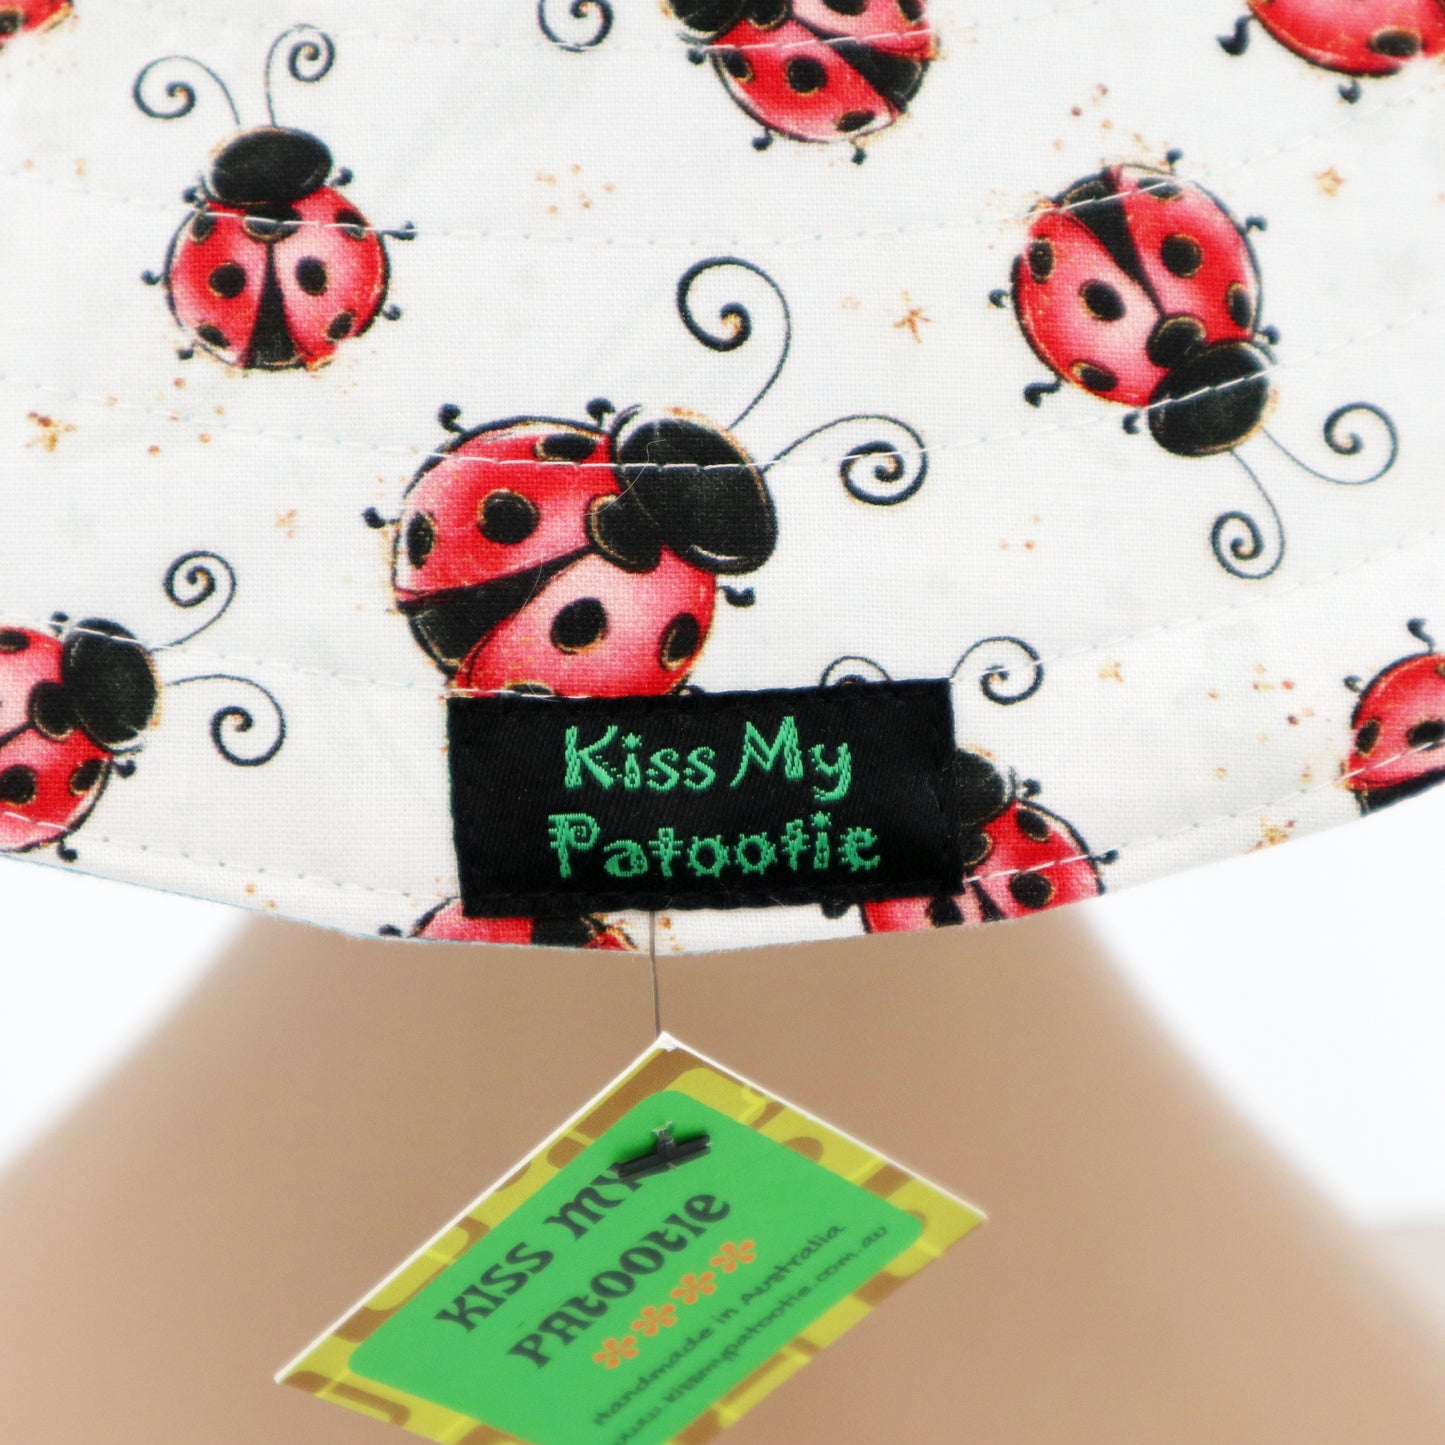 Reversible Sun Hat - Ladies & Girls sizes - ladybug